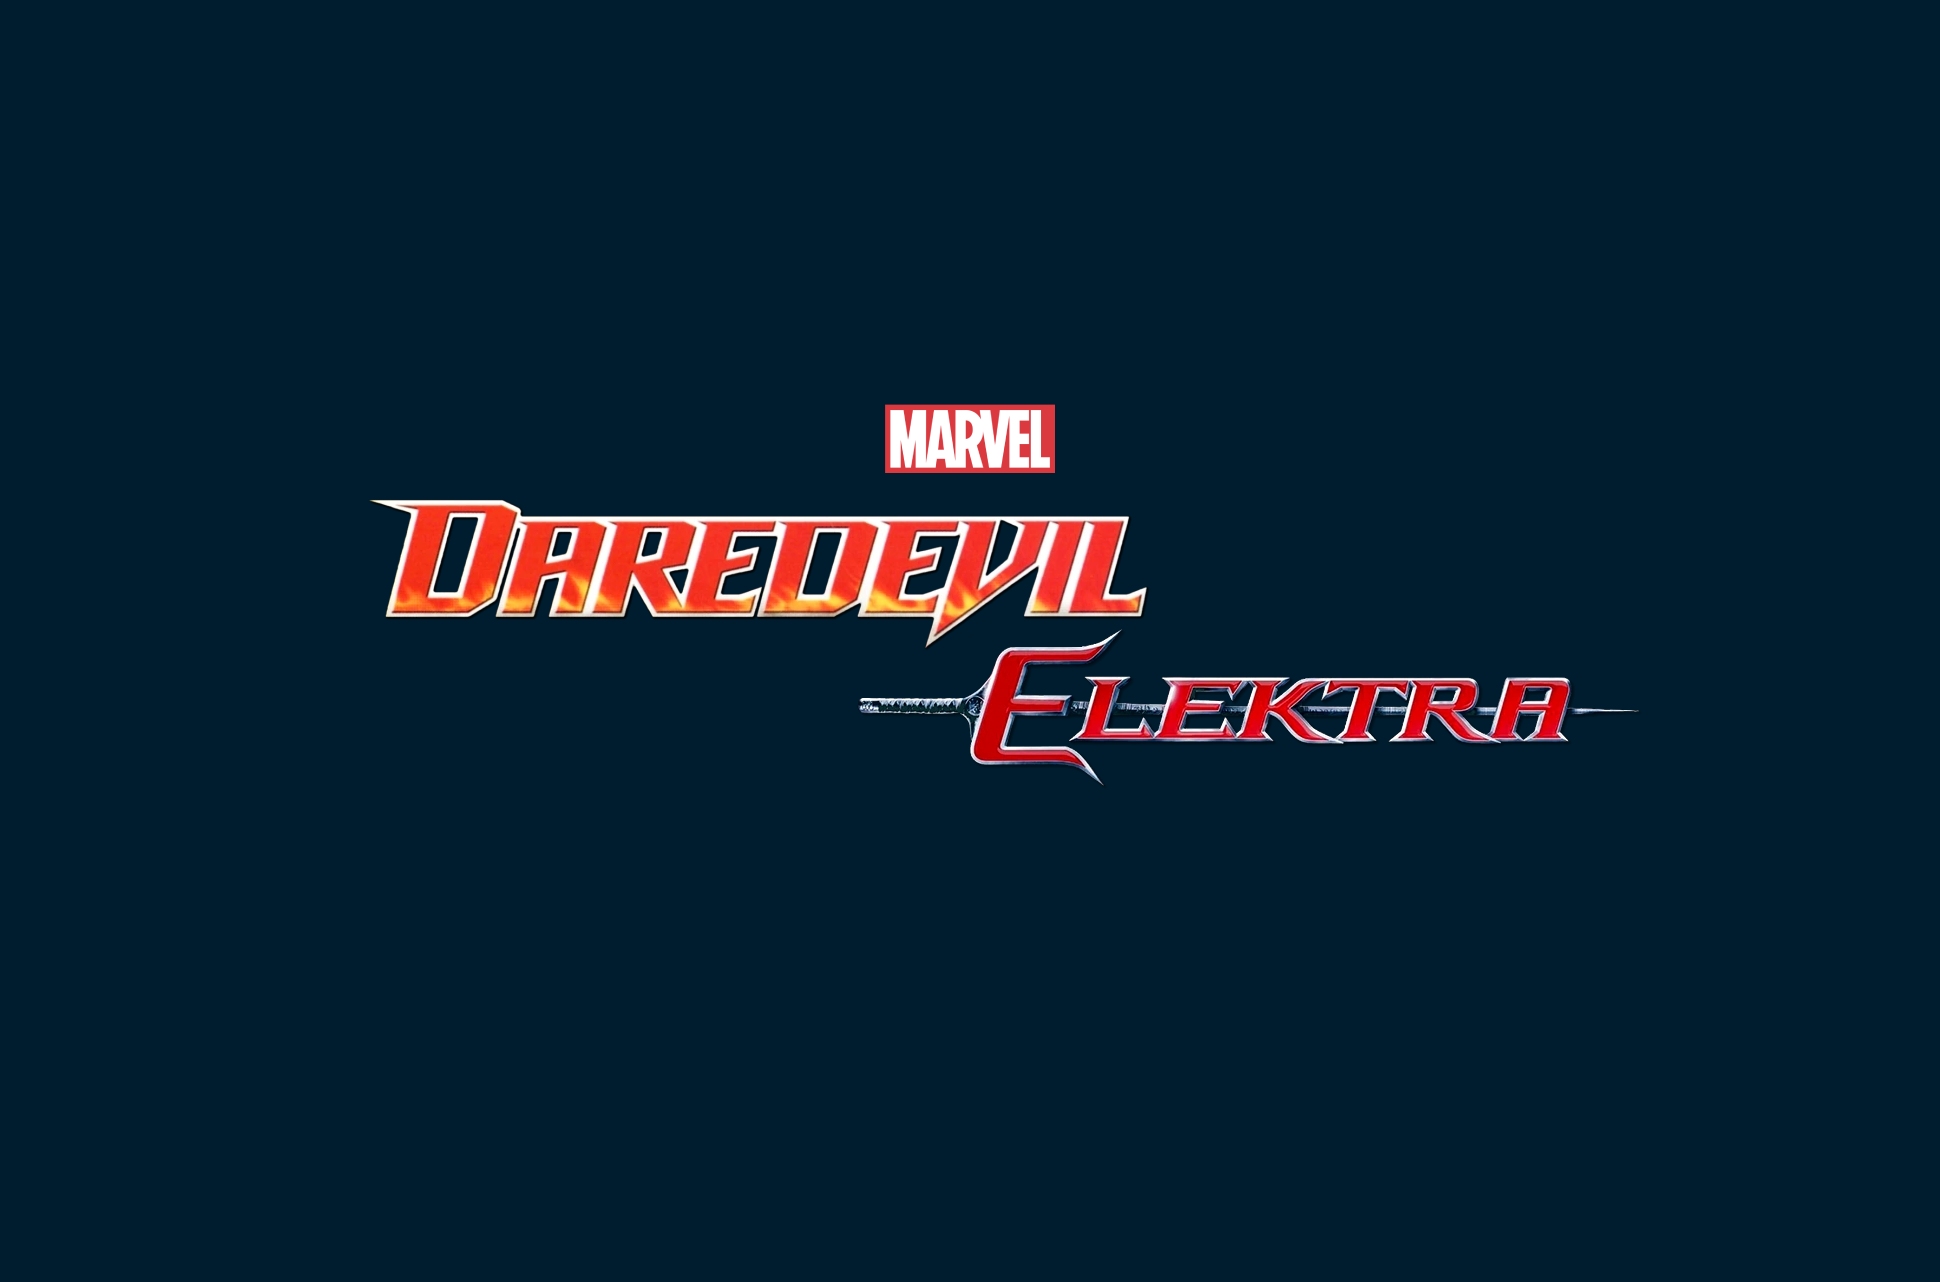 Marvel/Fox Daredevil and Elektra films.